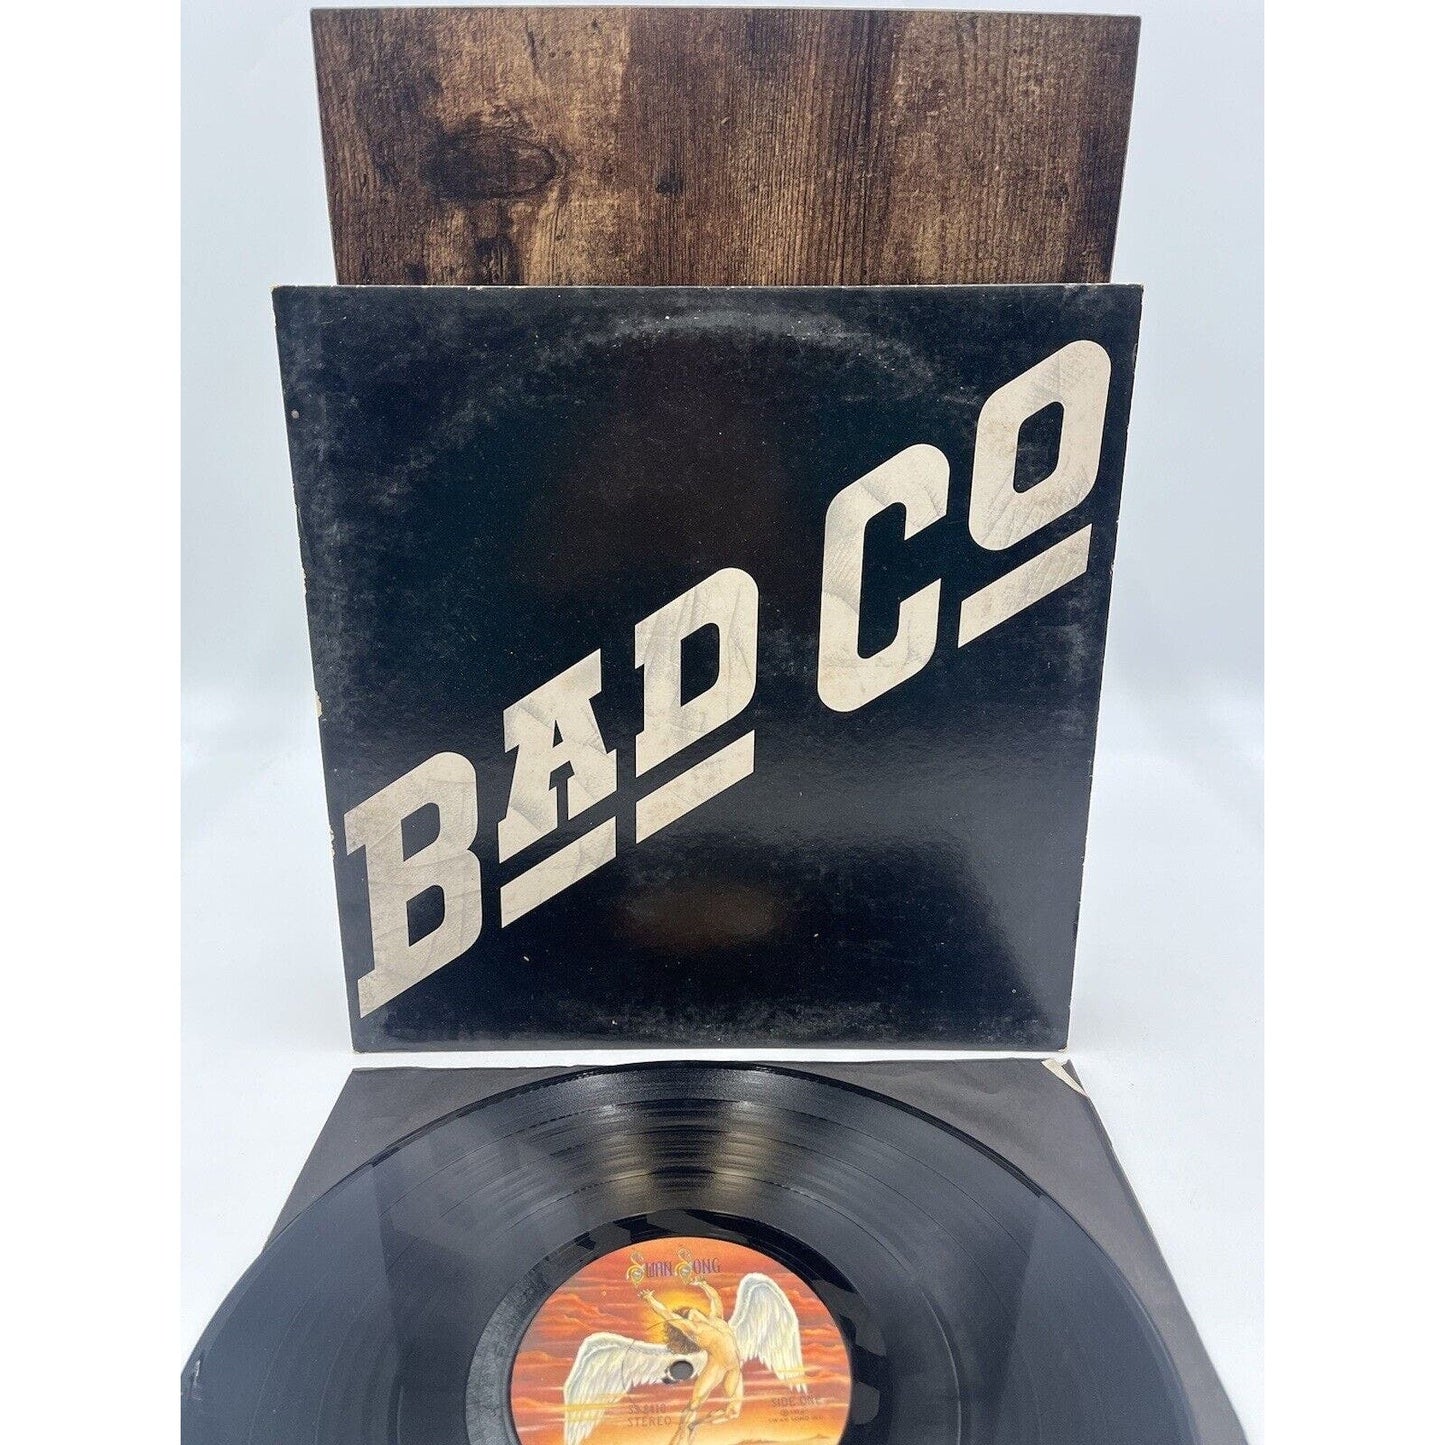 Bad Company - Bad Co Debut Vinyl LP (1974) Swan Song - SS 8410